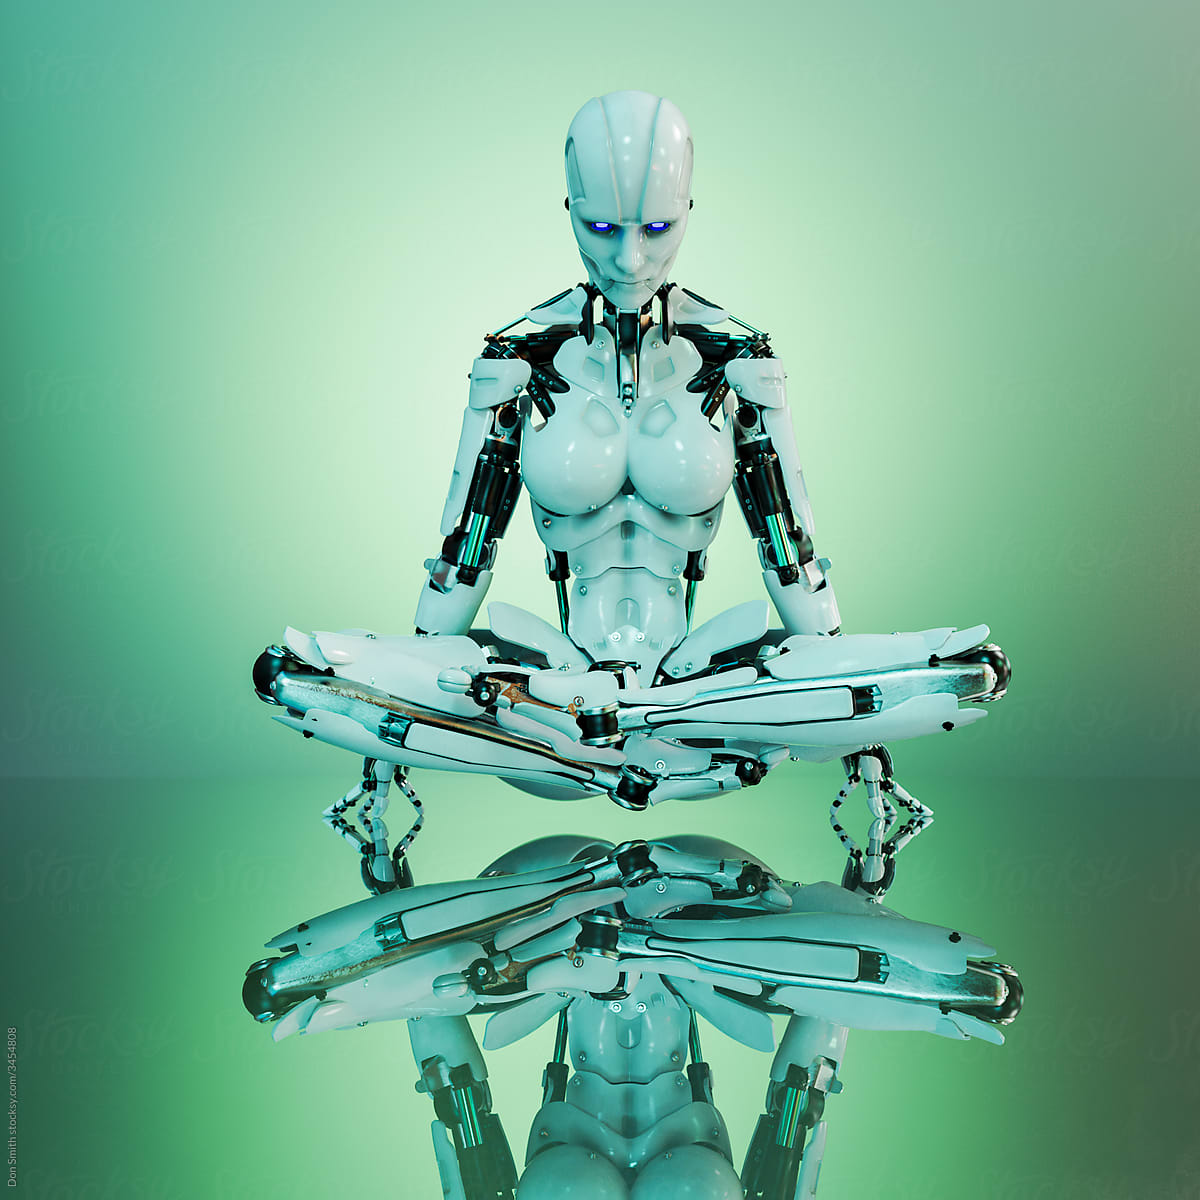 Female cyborg in yoga pose sitting balancing